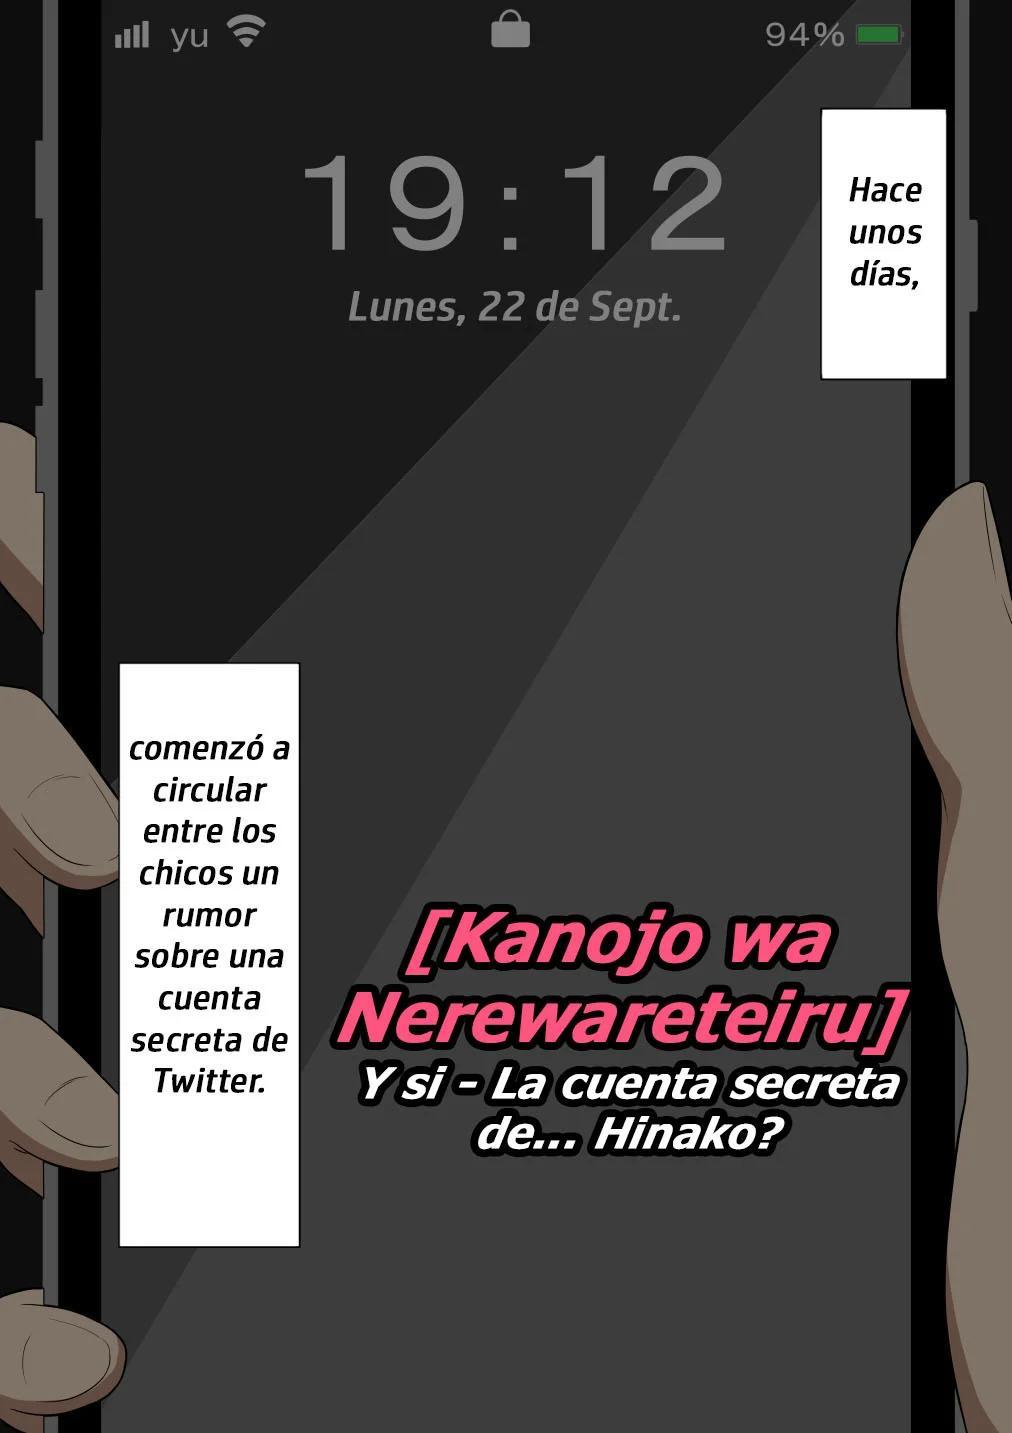 Kanojo wa Nerewareteiru - Y Si - La Cuenta Secreta de Hinako? - 0